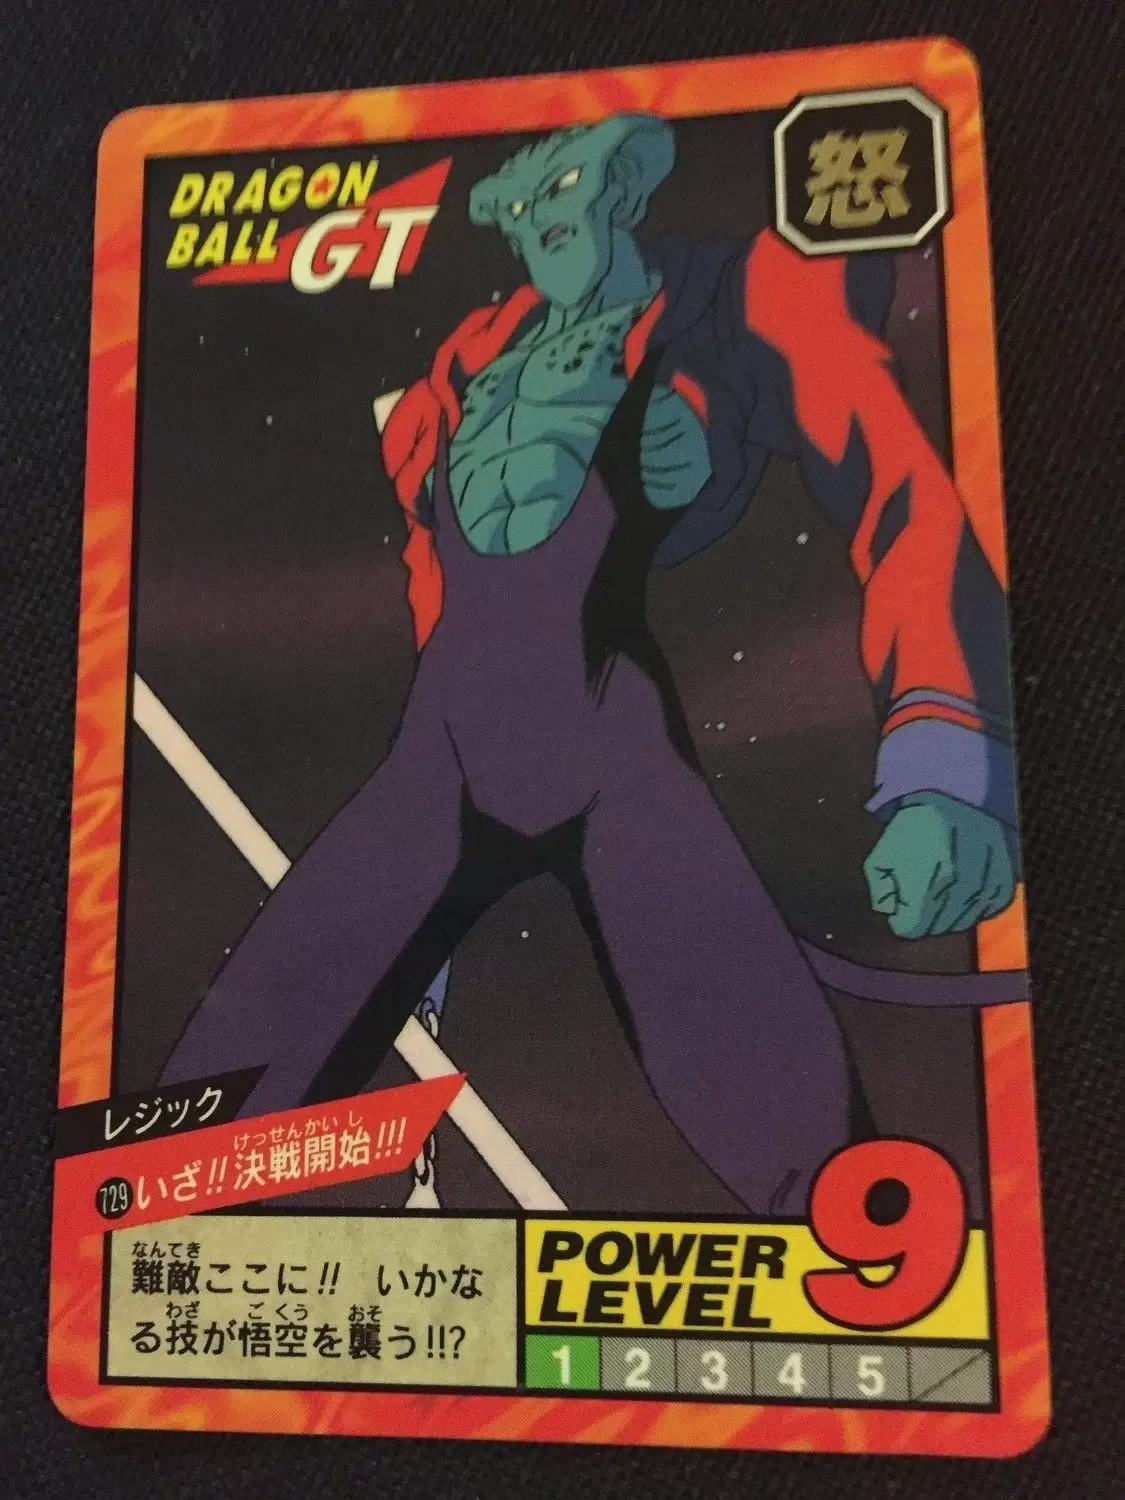 Power Level Part 17 - Dragon Ball Power Level Card #729